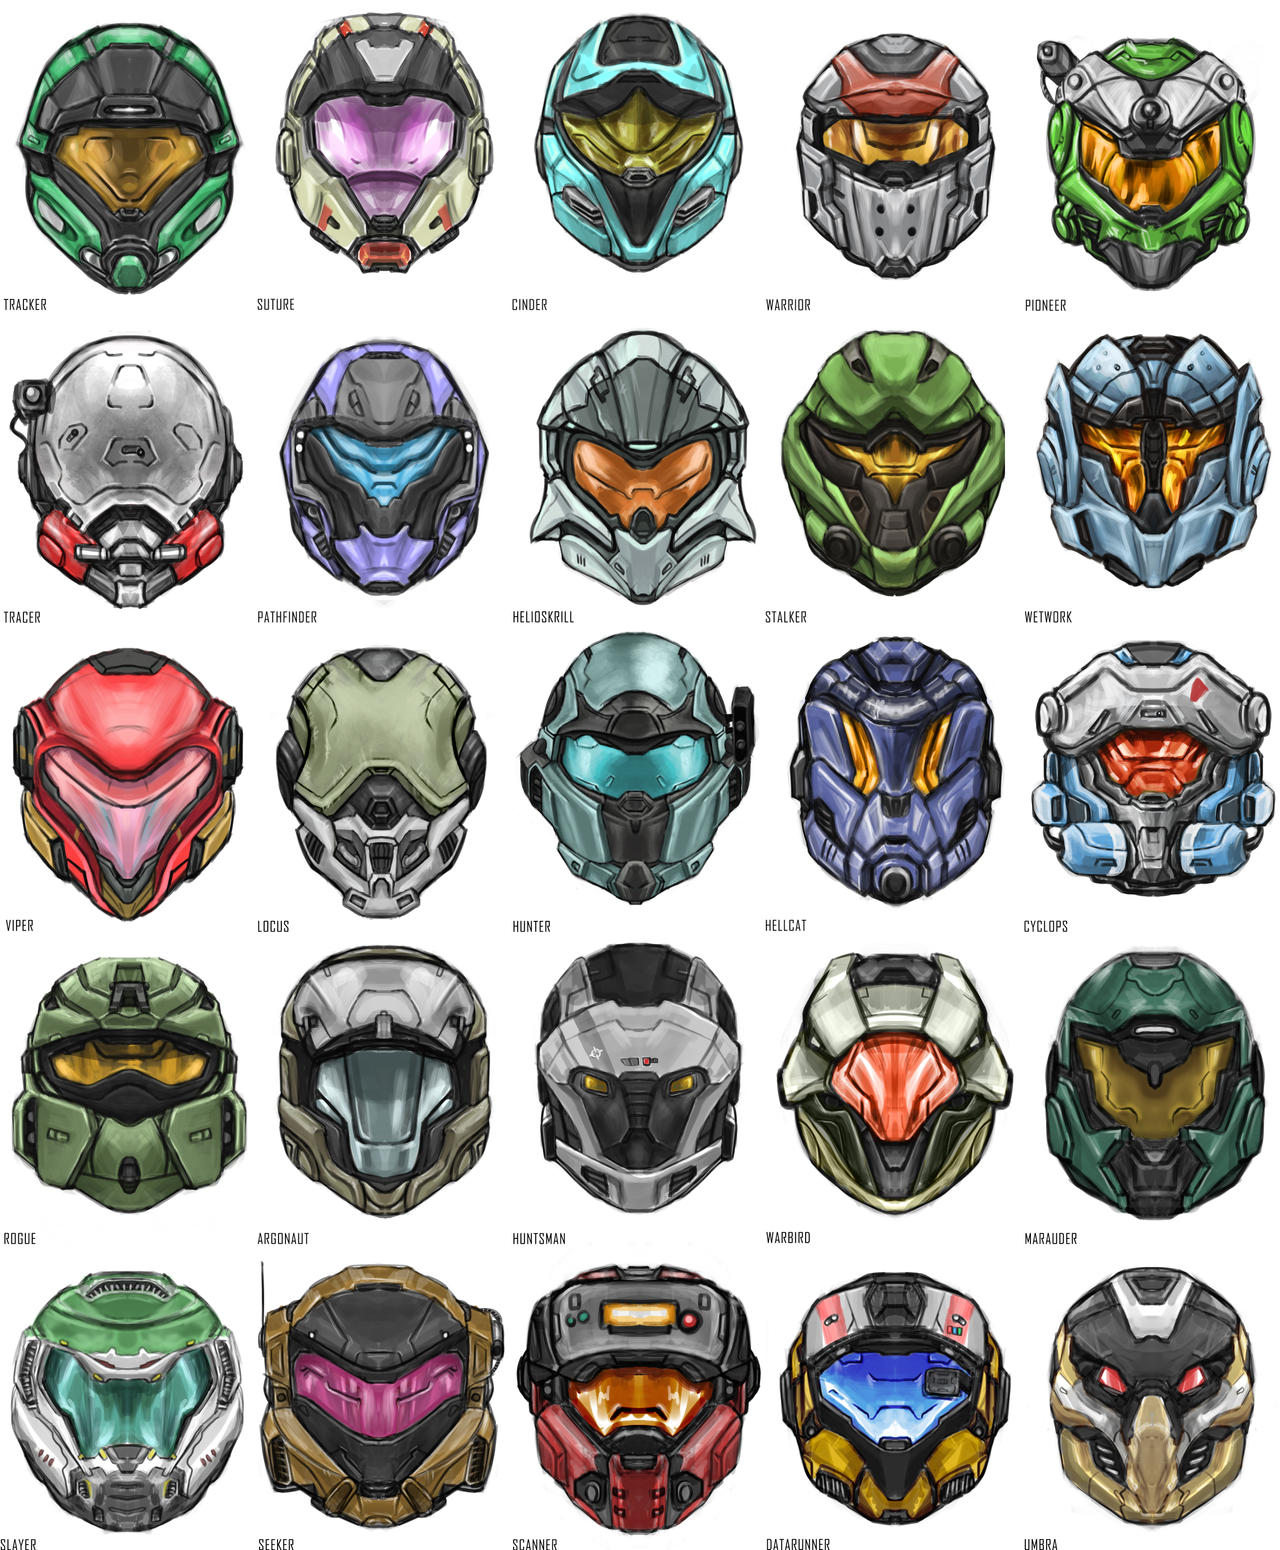 Halo Helmet Fan Concepts by NovaRunner on DeviantArt